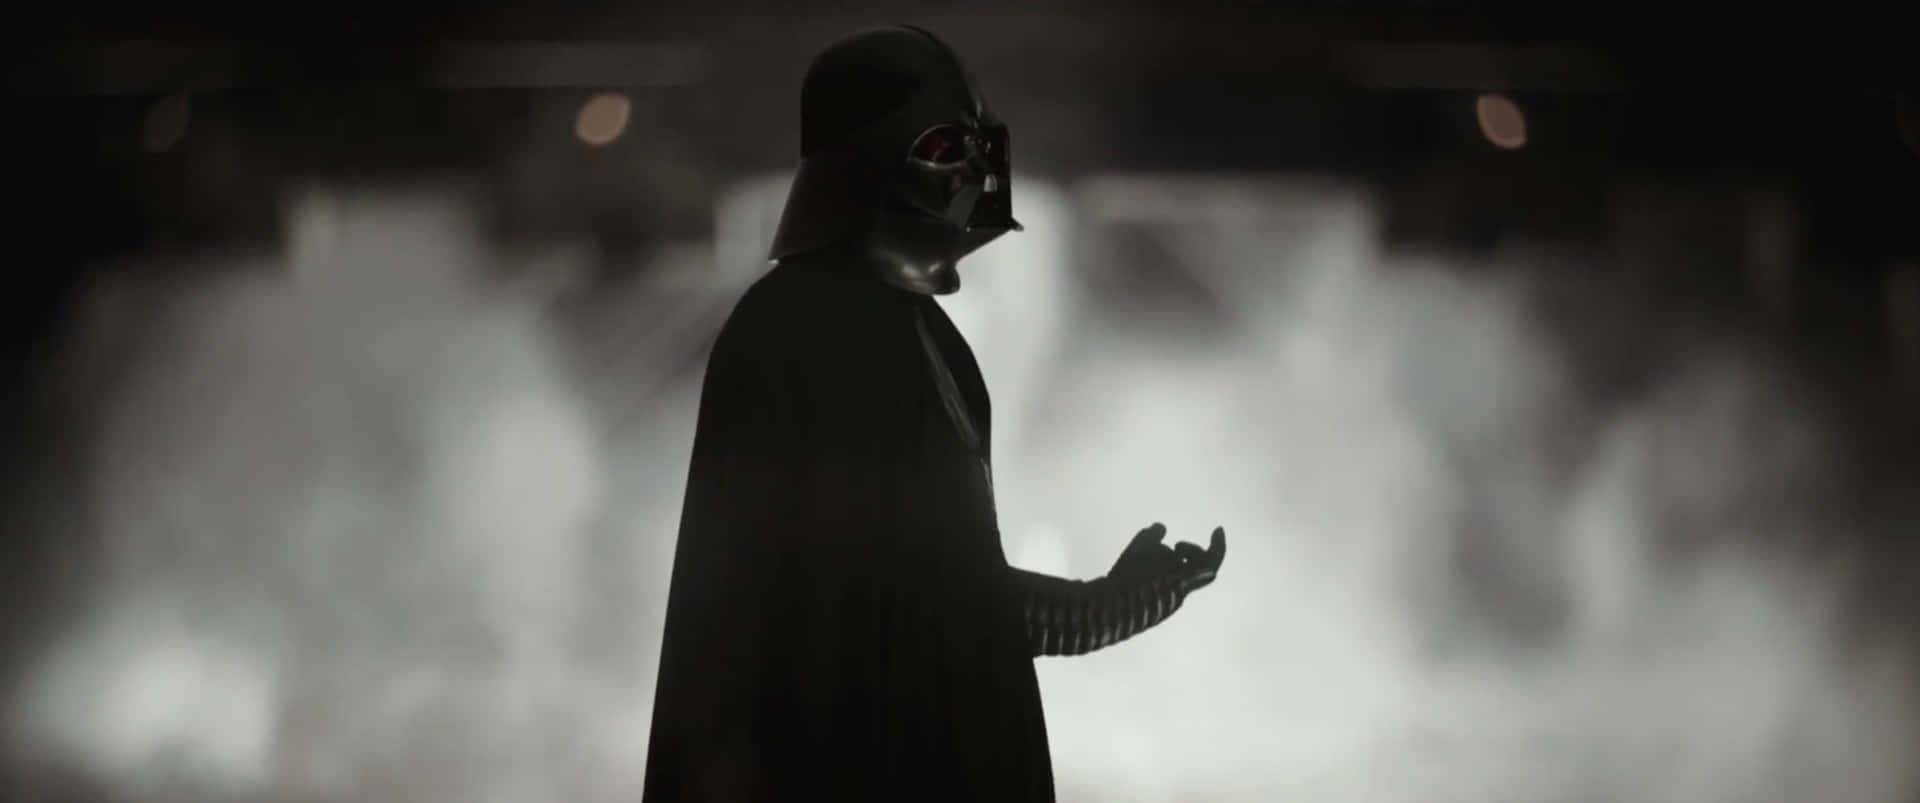 Darth Vader In The Dark